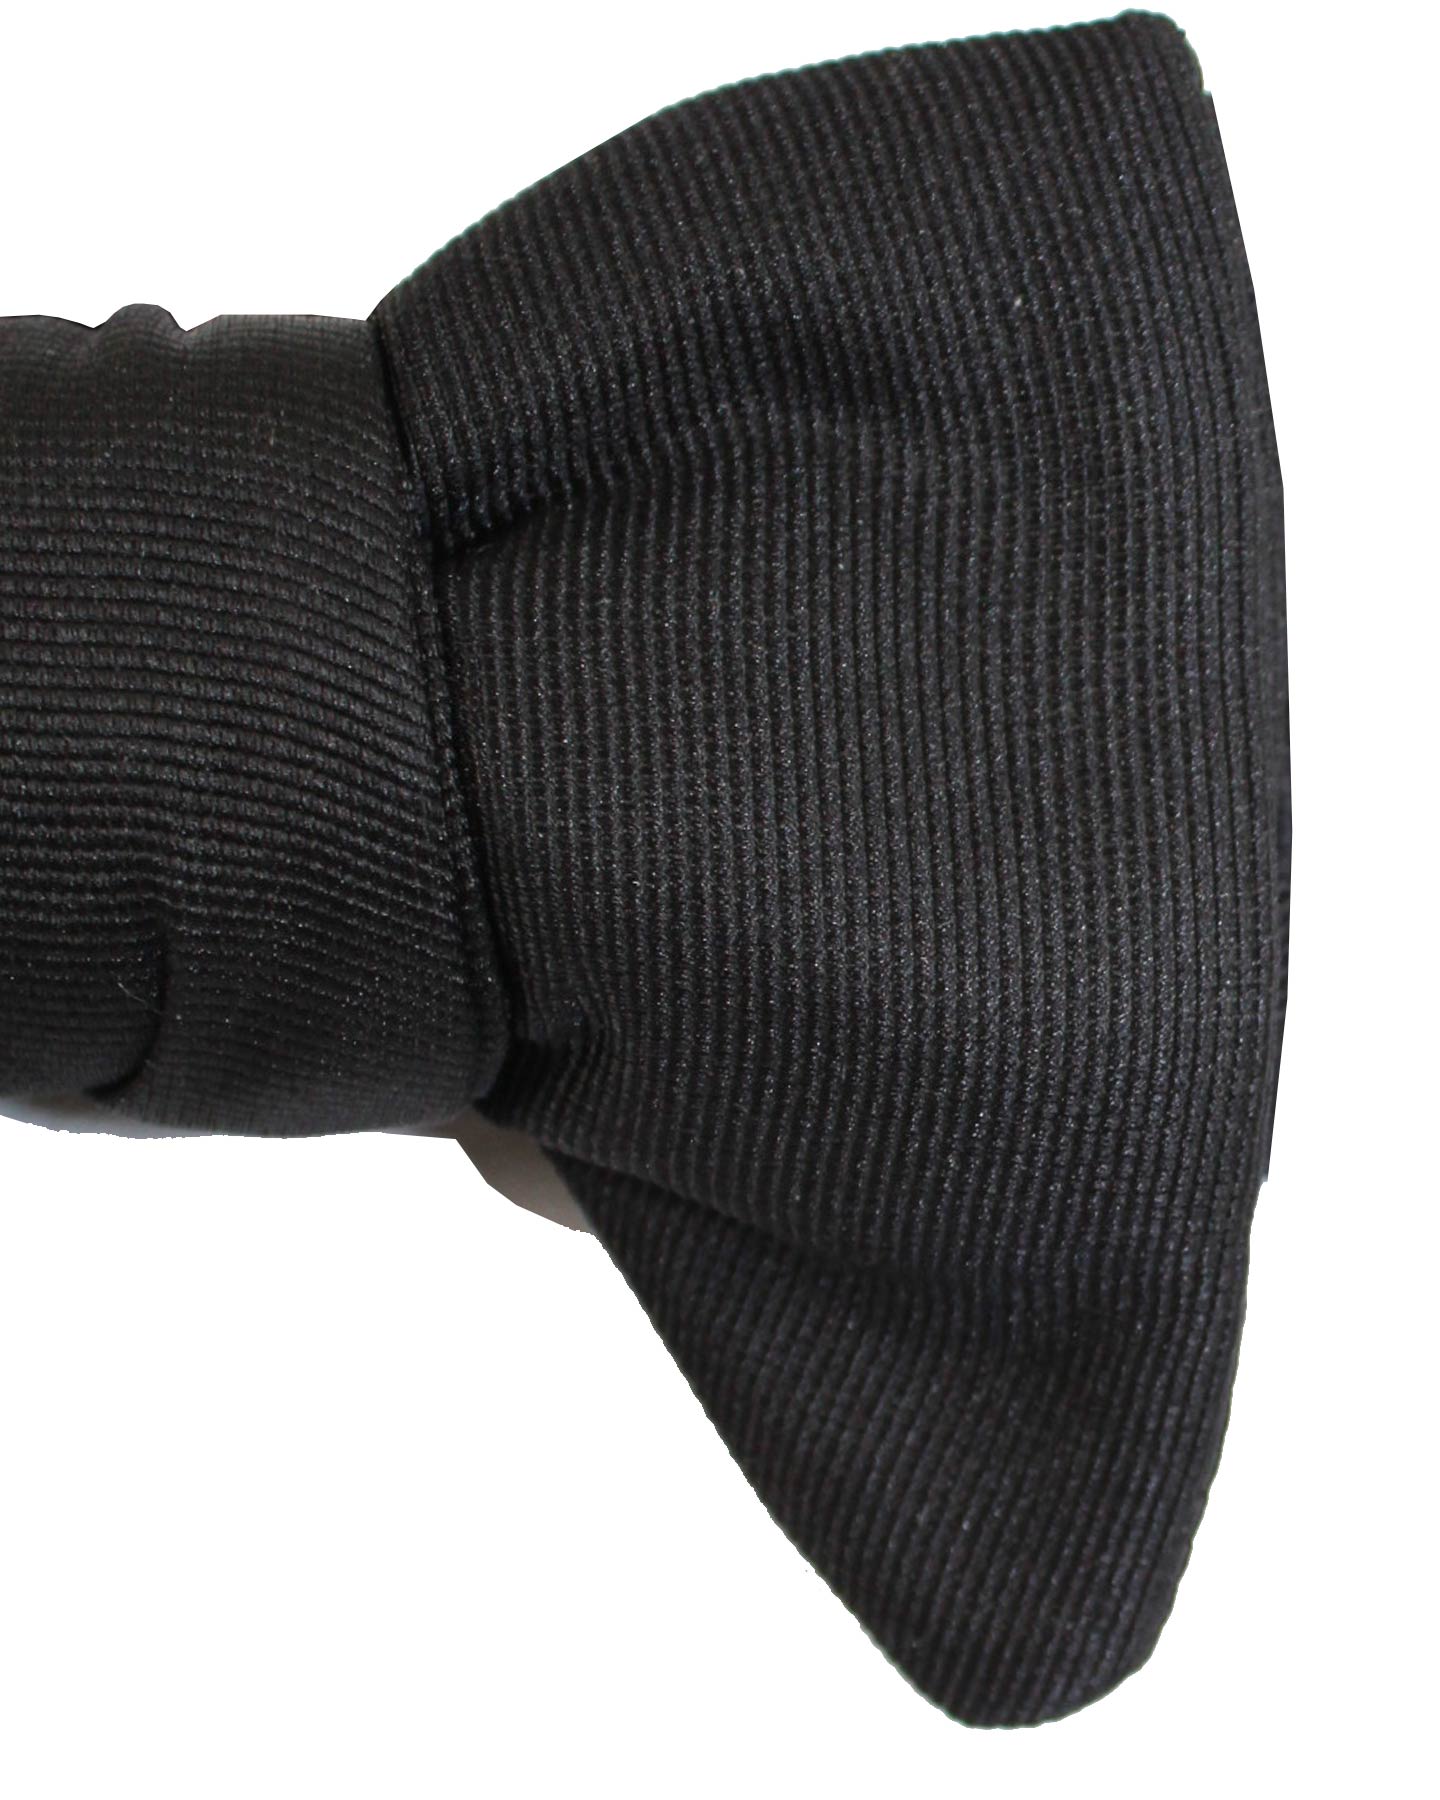 Silk Bow Tie Black Grosgrain New